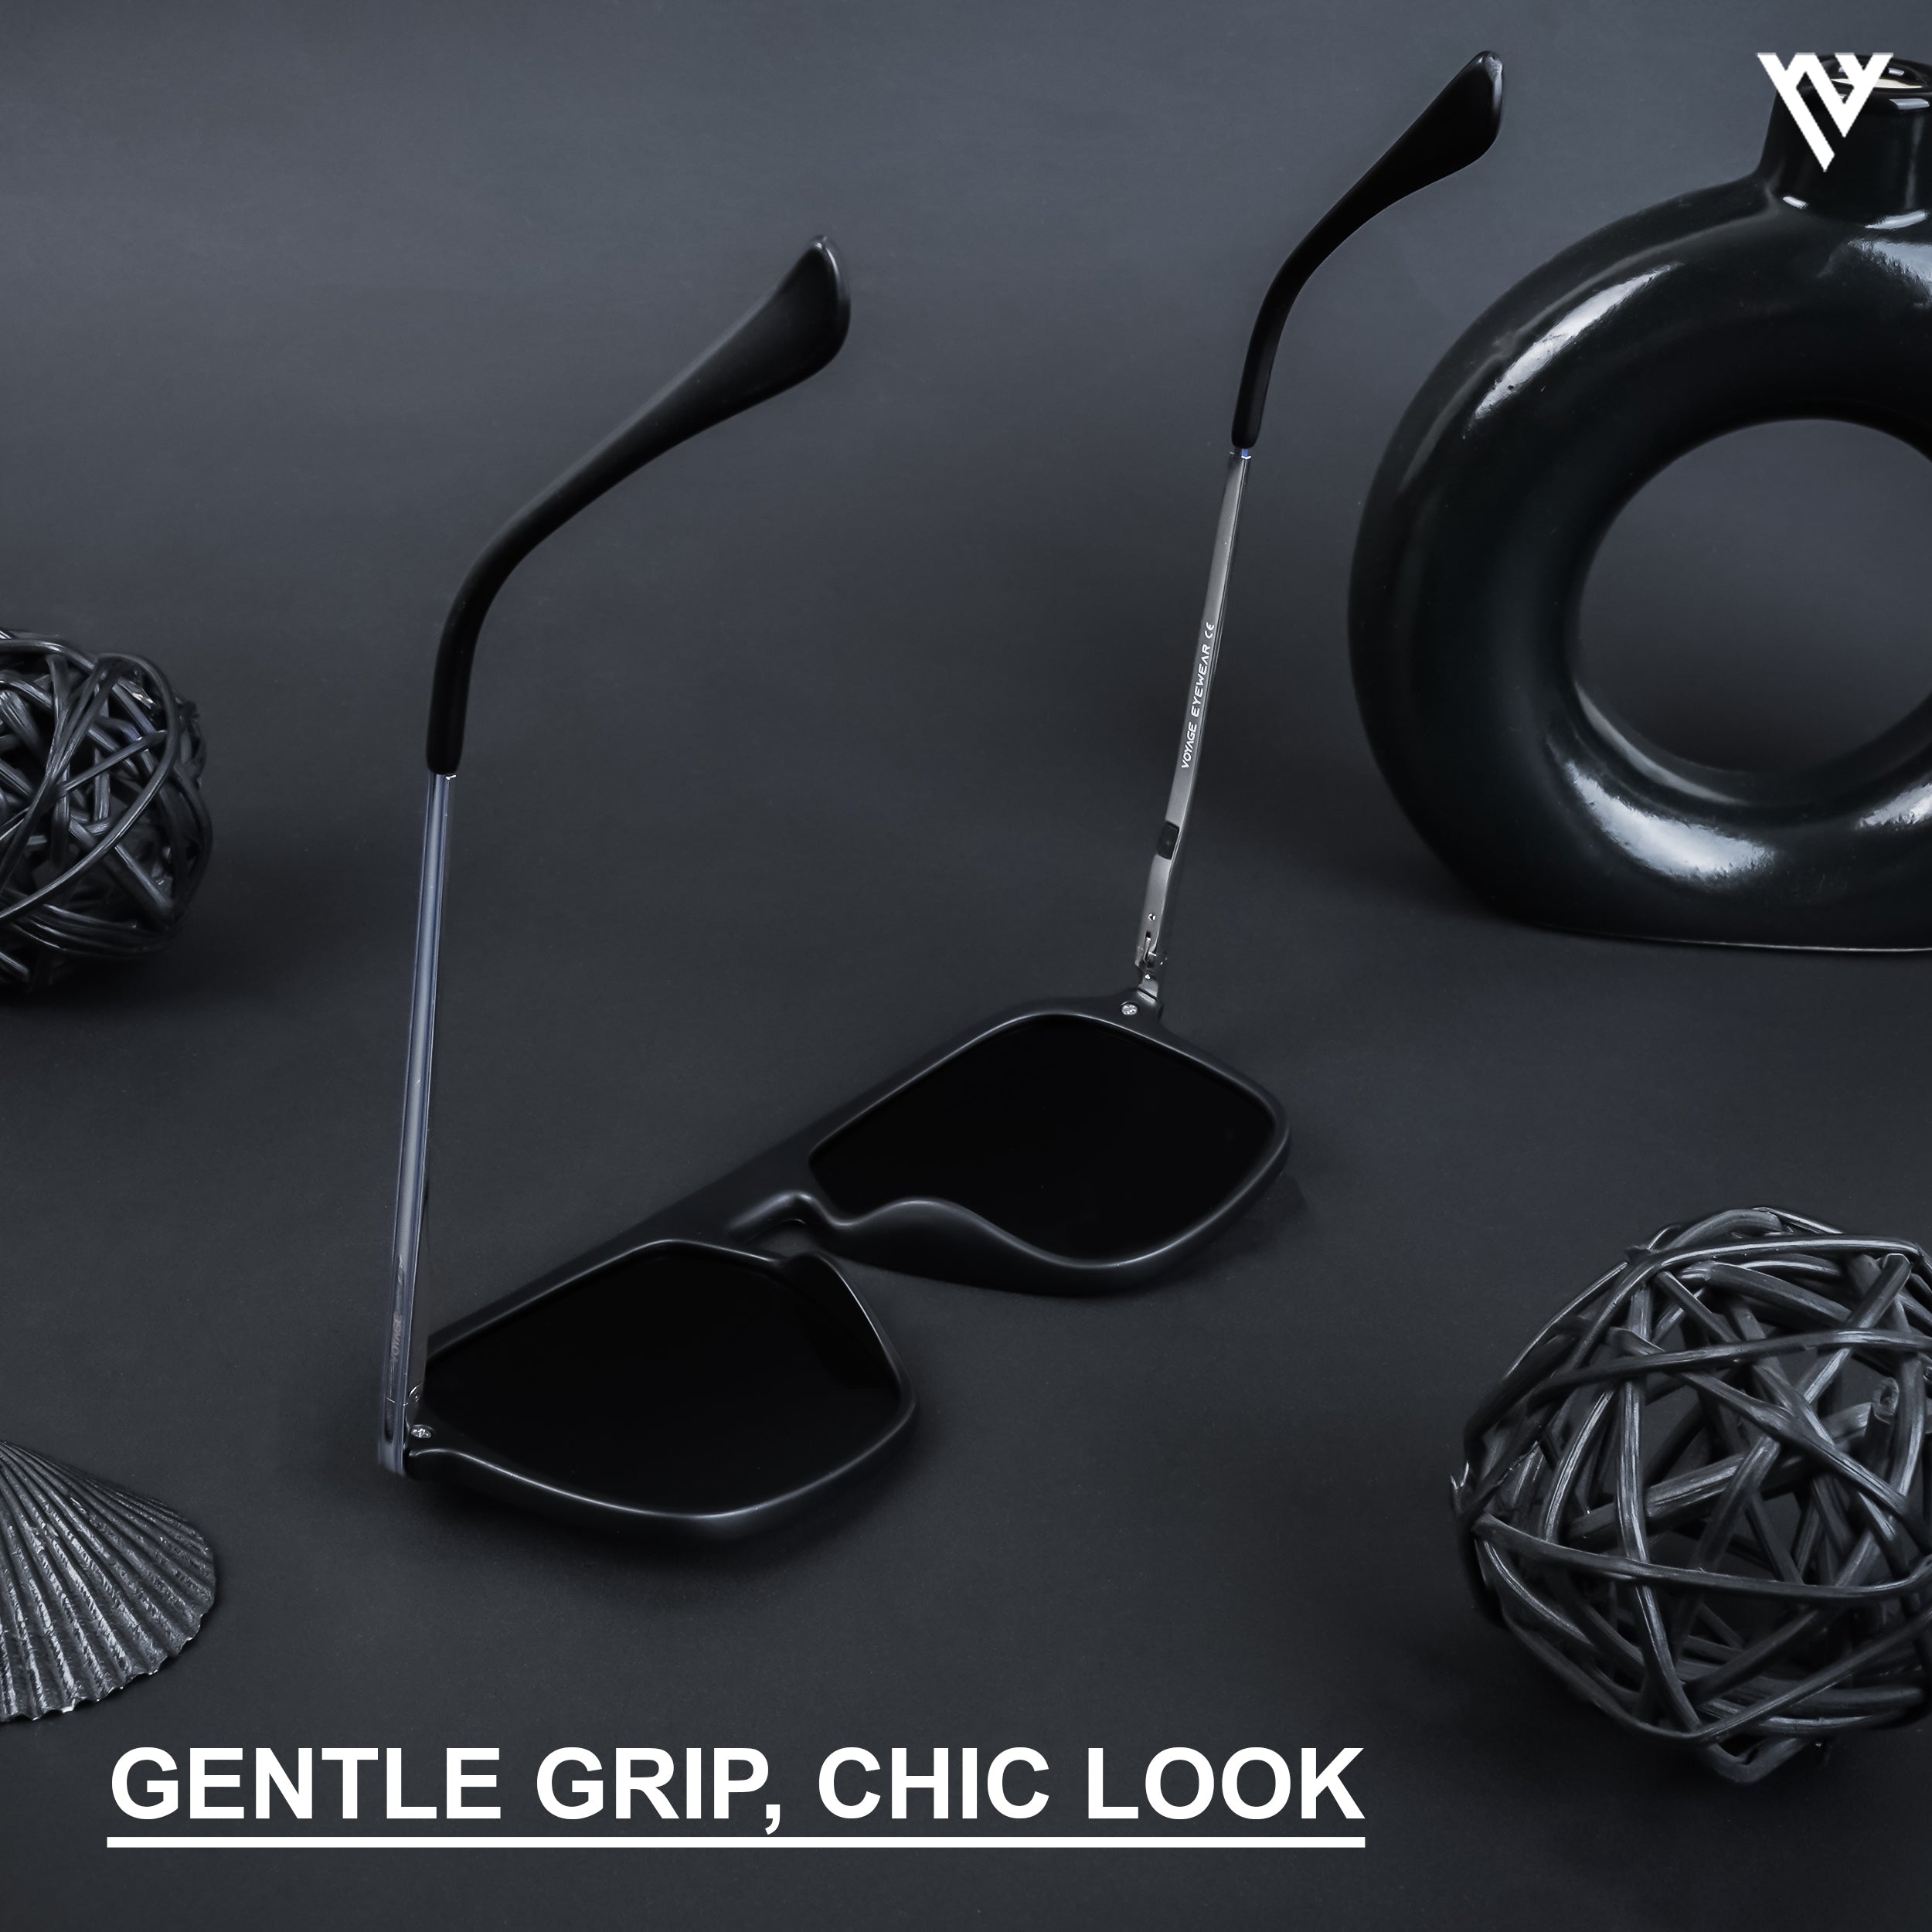 Voyage Exclusive Purple & Clear Polarized Wayfarer Sunglasses for Men & Women - PMG4577